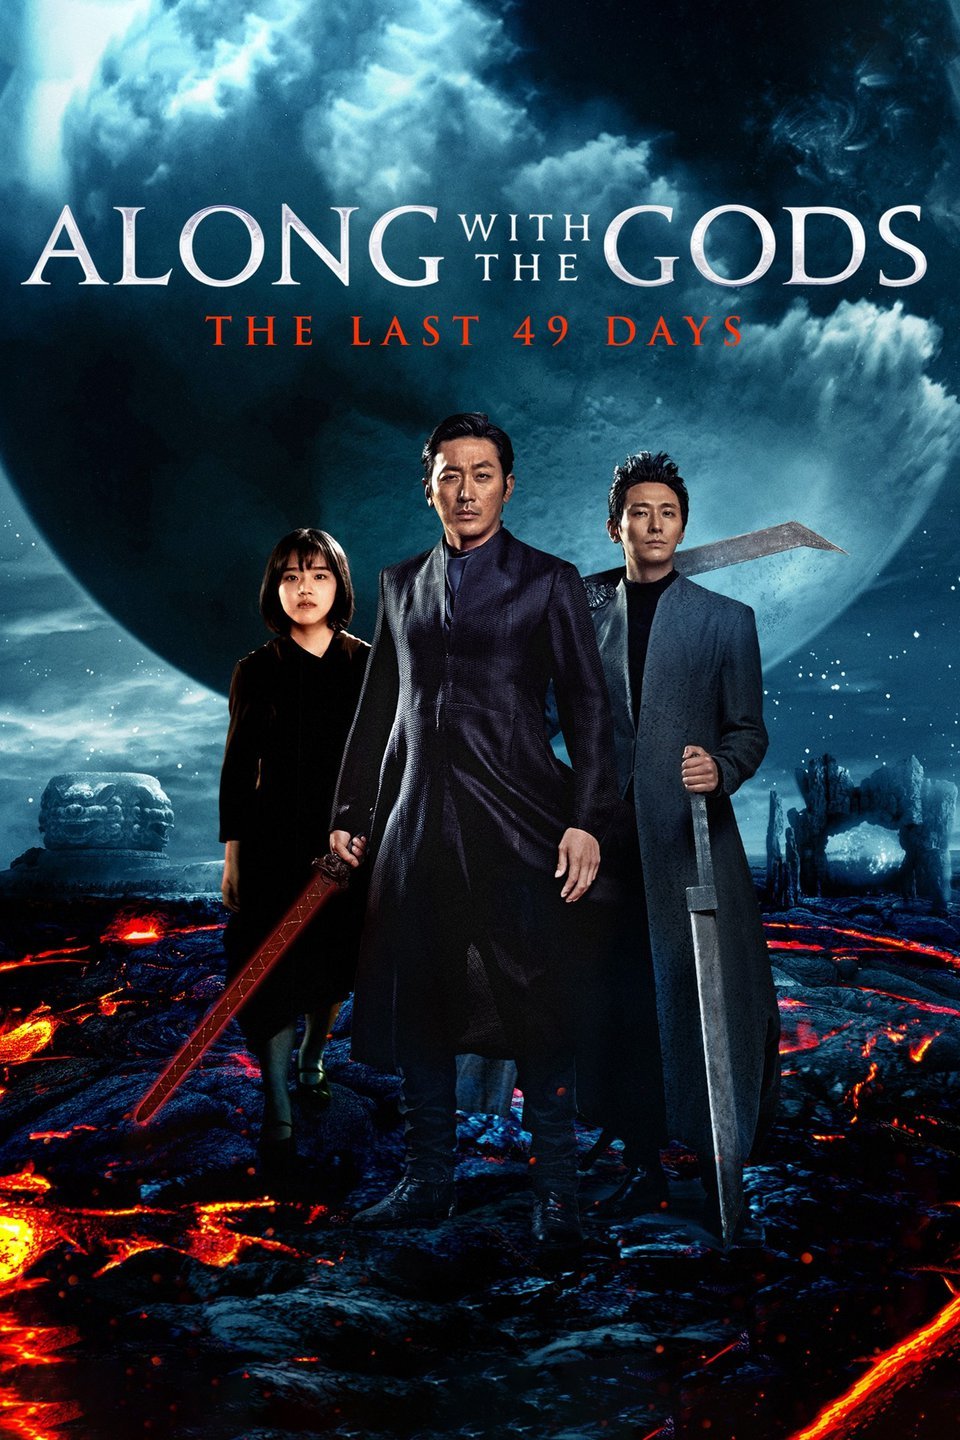 [MINI Super-HQ] Along with the Gods: The Last 49 Days (2018) ฝ่า 7 นรกไปกับพระเจ้า ภาค 2 [1080p] [พากย์ไทย 5.1 + เสียงเกาหลี DTS] [บรรยายไทย + อังกฤษ] [เสียงไทย + ซับไทย] [OPENLOAD]